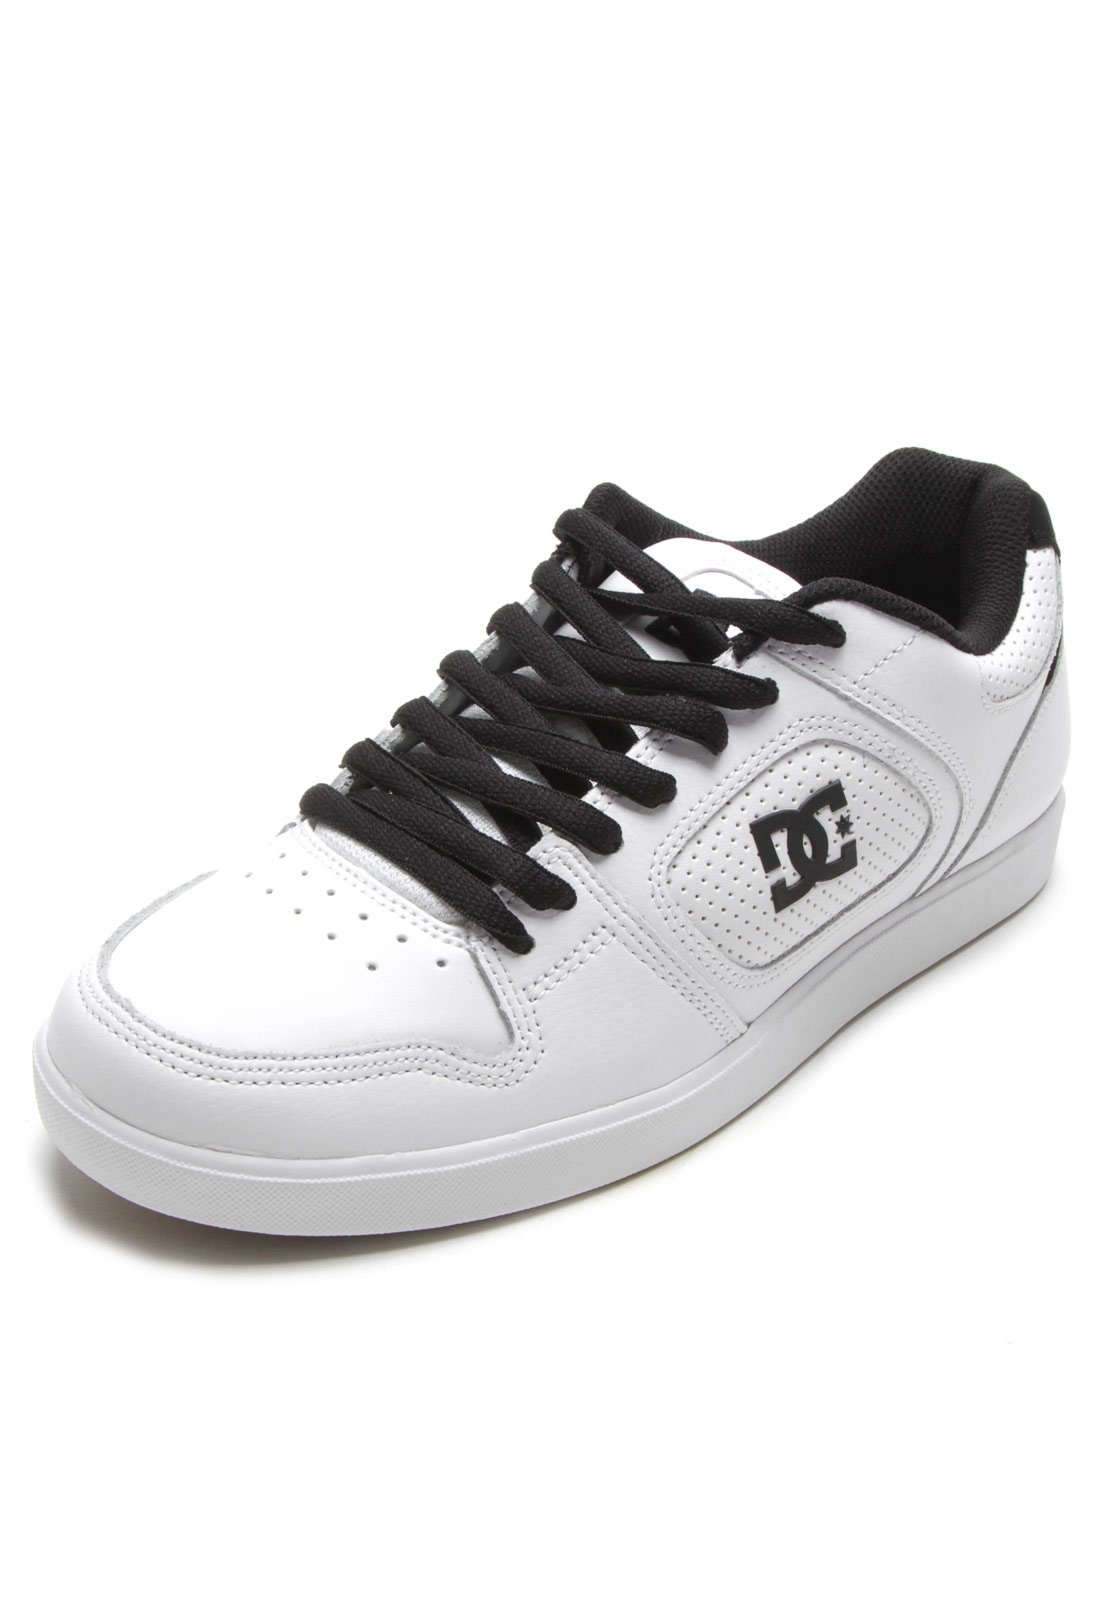 tenis dc shoes branco